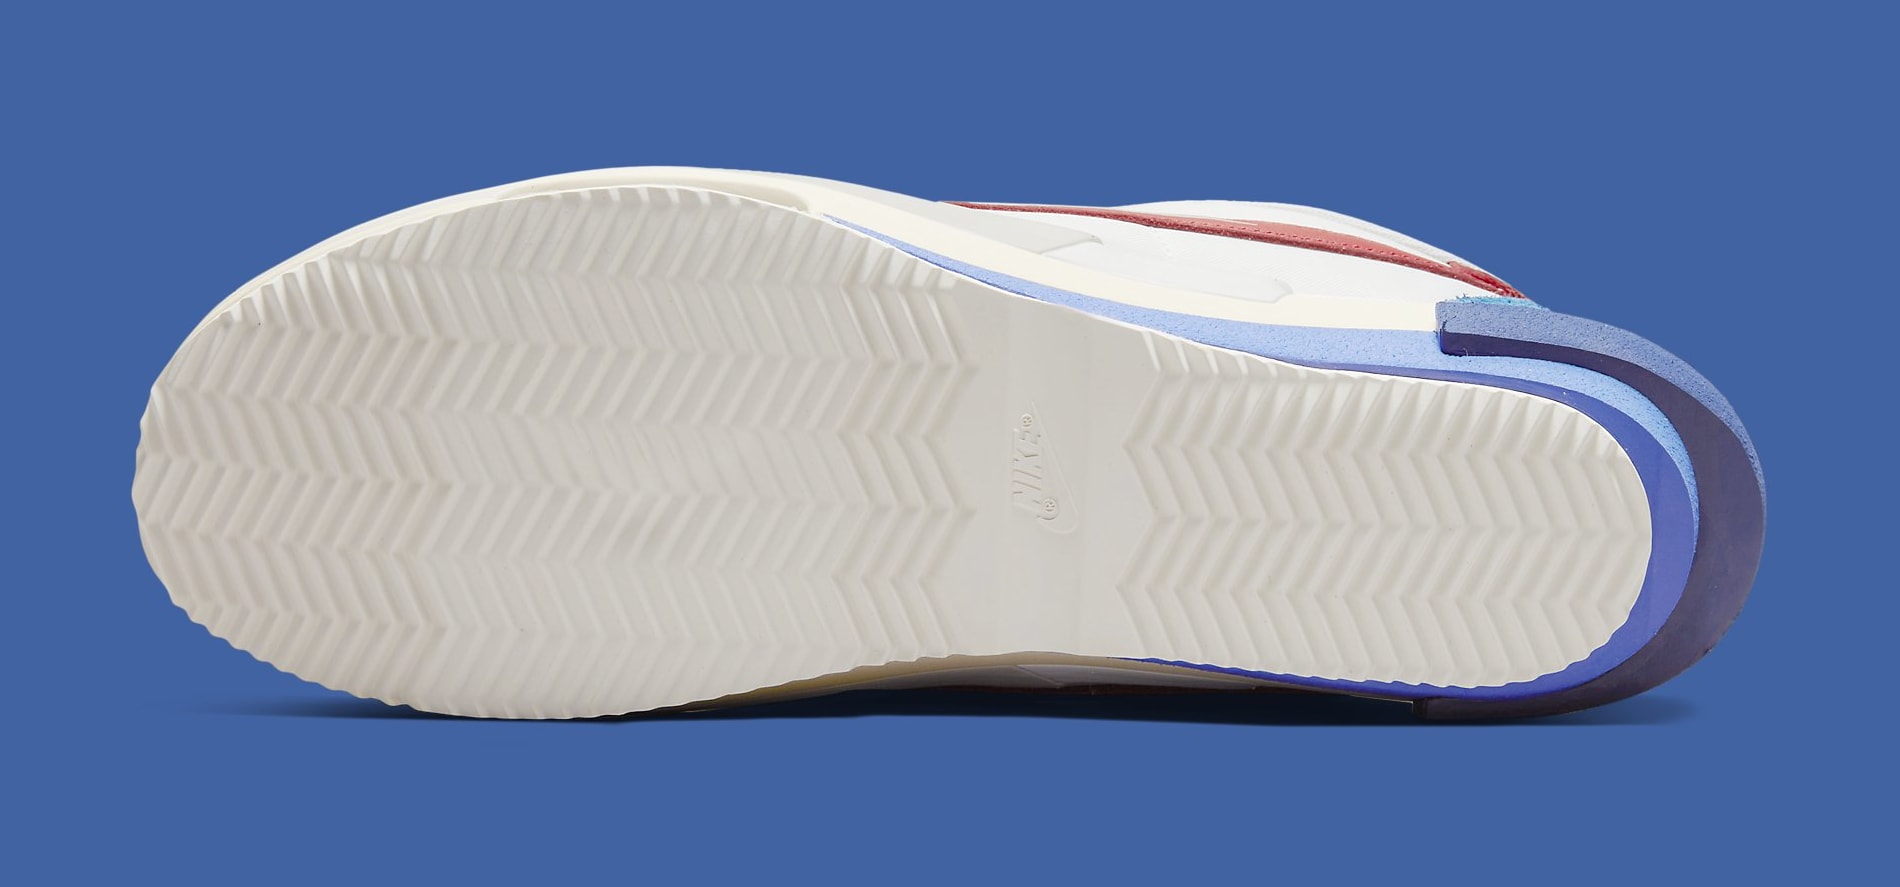 Sacai x Nike Cortez 'White/Varsity Royal' DQ0581 100 Outsole